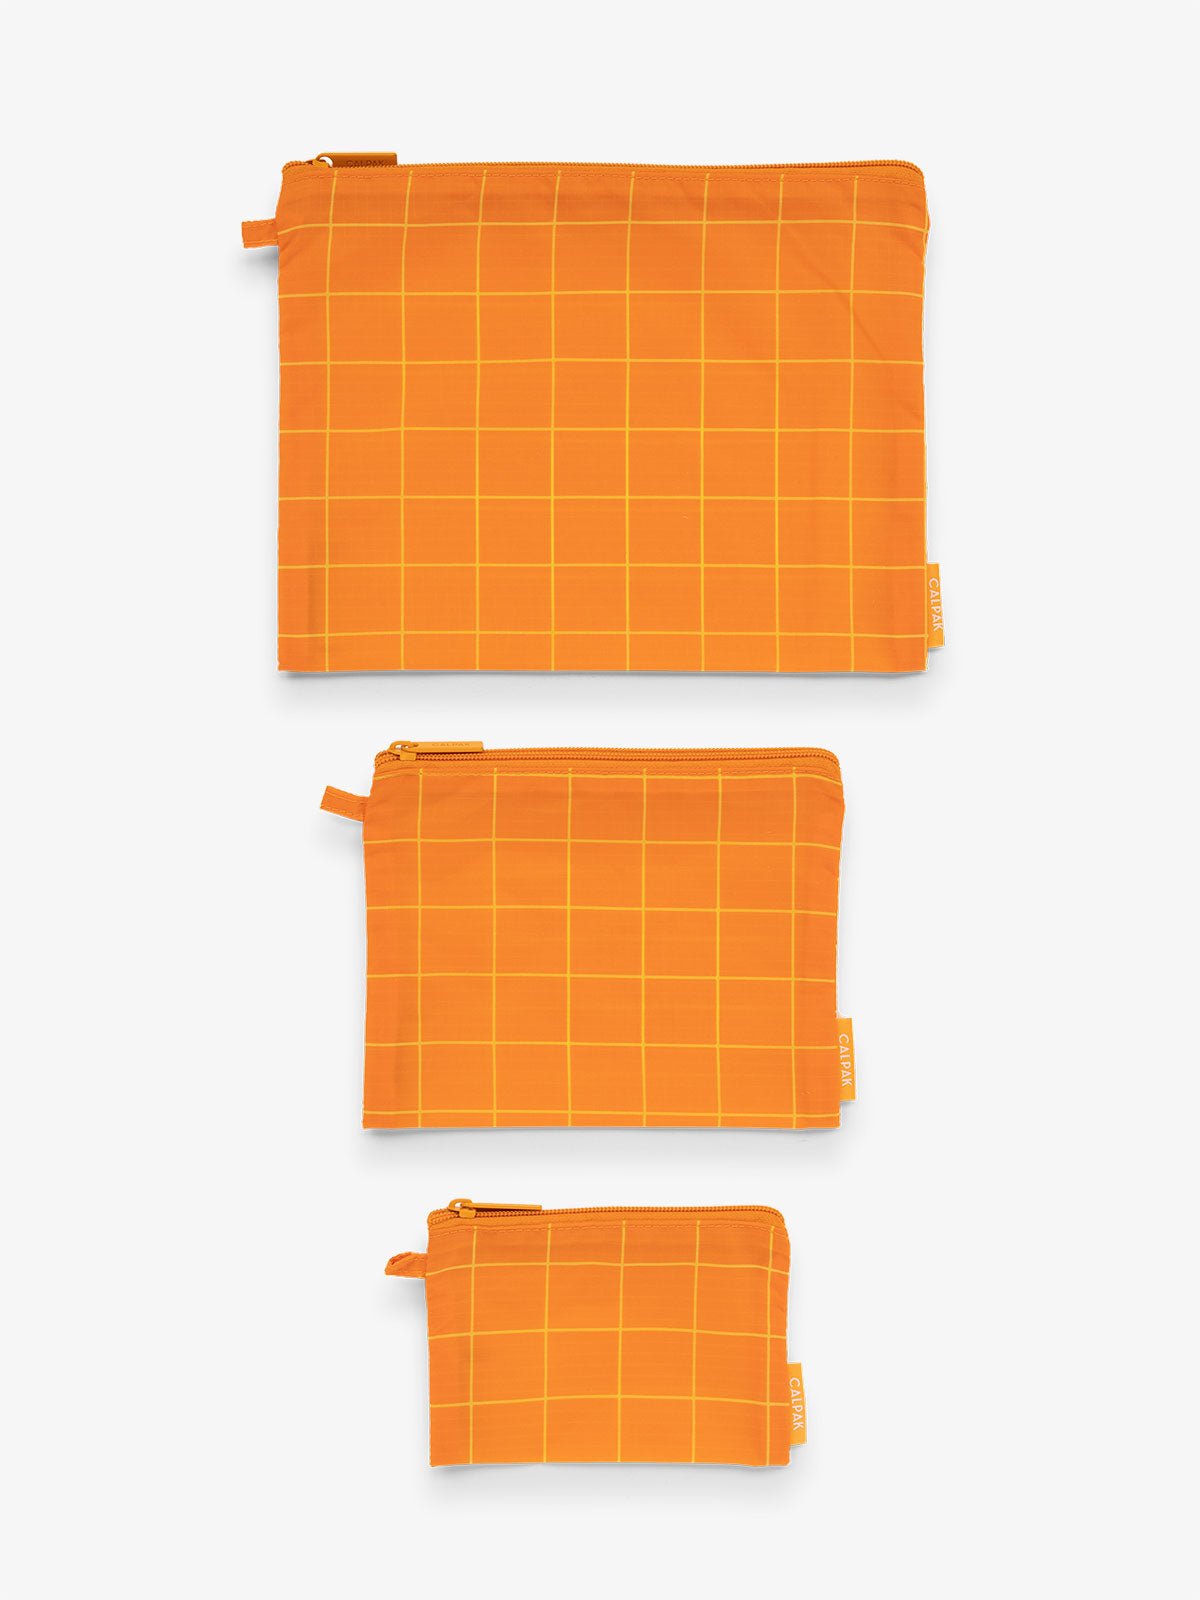 CALPAK Compakt water resistant zippered pouch set for organization in orange grid print